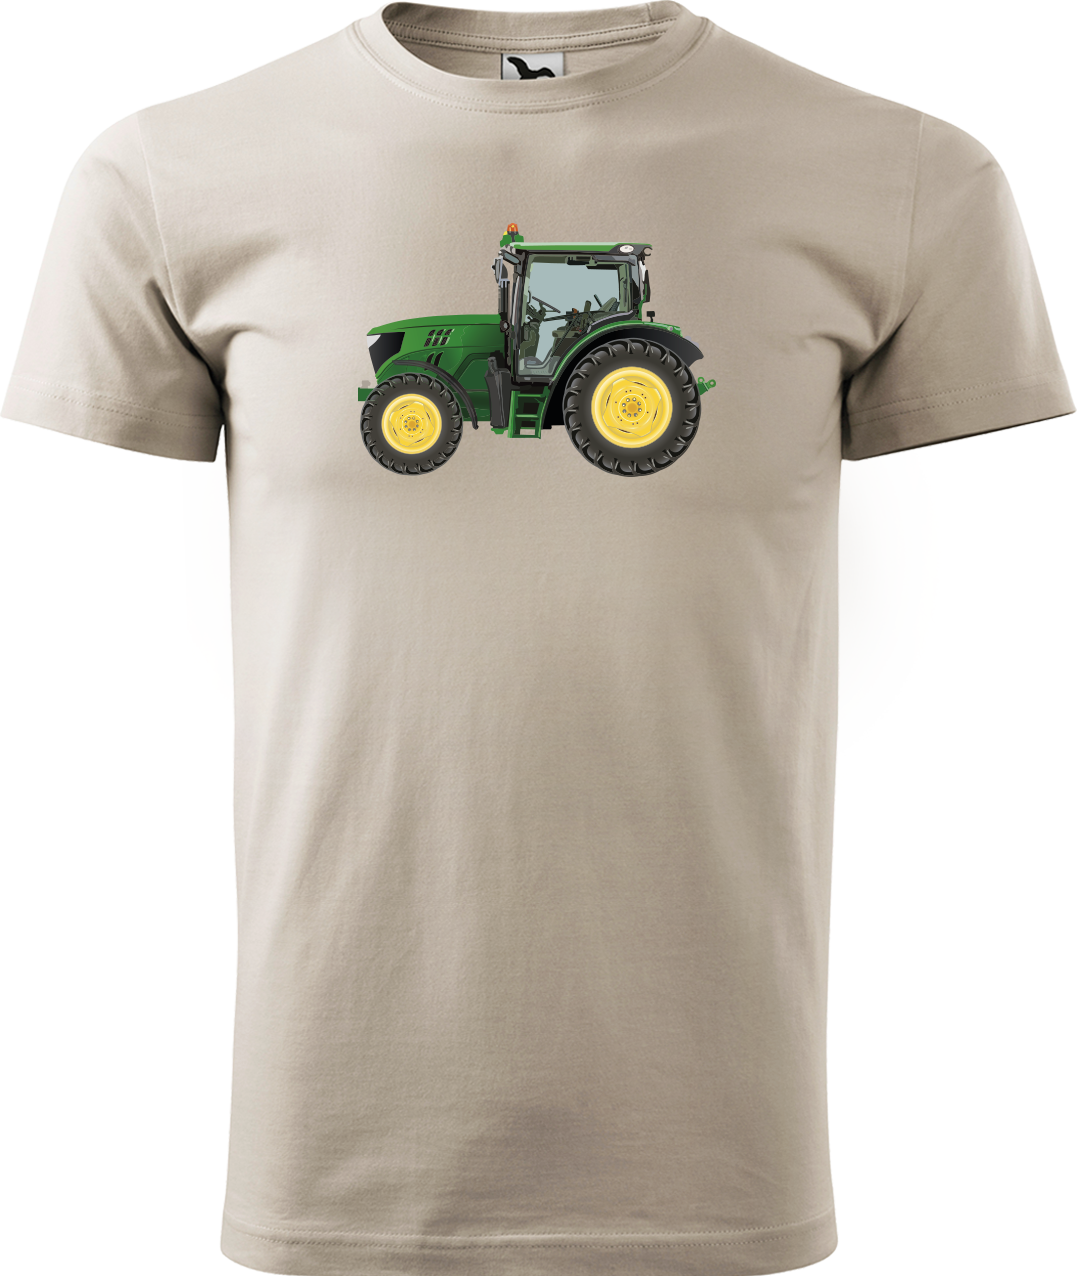 Tričko s traktorem - Zelený traktor Velikost: 3XL, Barva: Béžová (51)